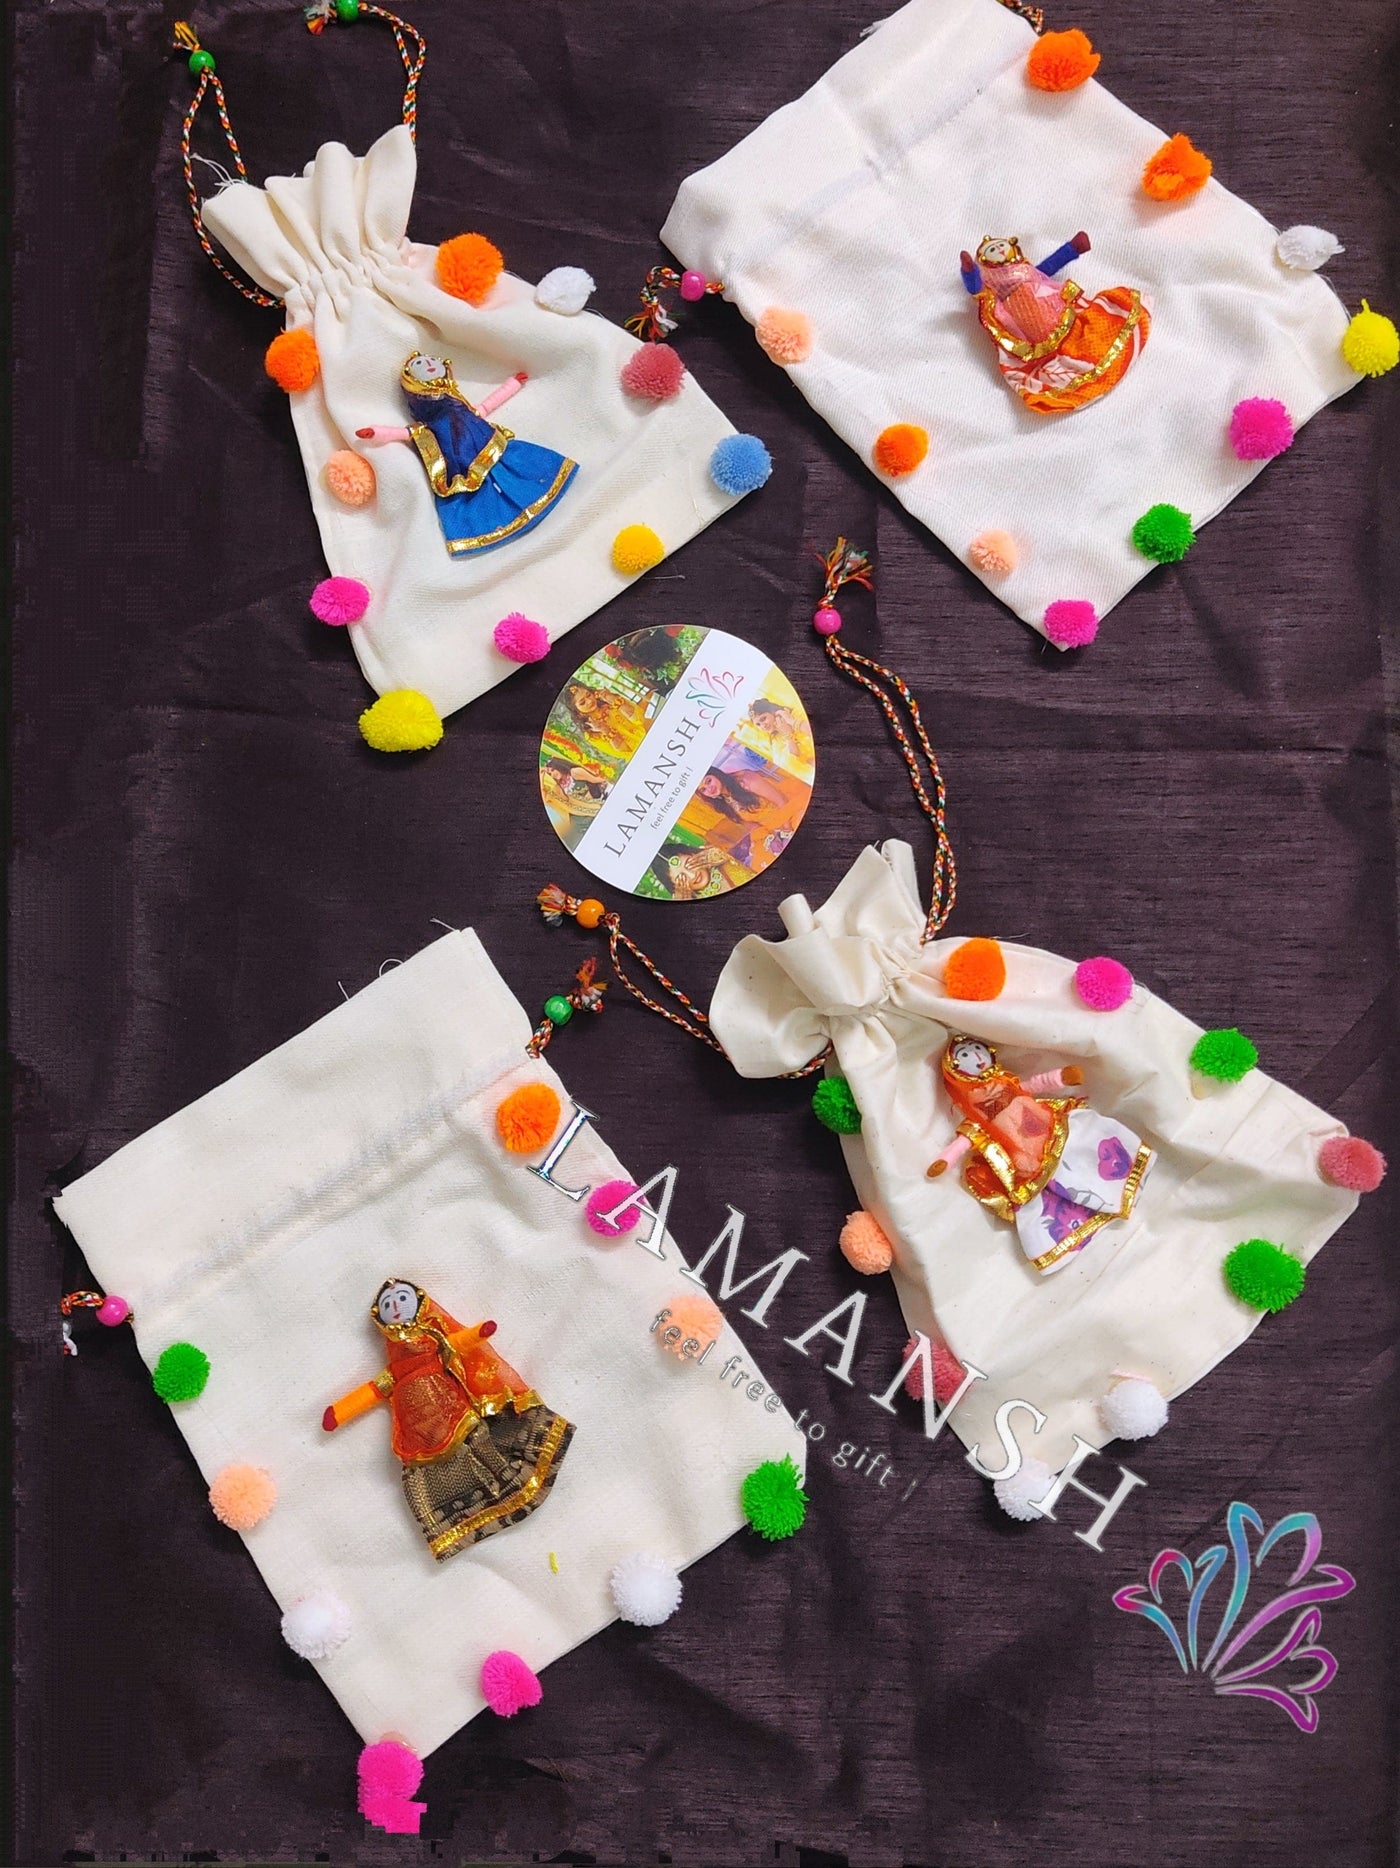 LAMANSH ® Women's Potli Bag LAMANSH Pack of 5 Rajasthani Puppet Style Potli Bags for Gifting,Giveaways / Perfect for Gifting in Makar Sankranti